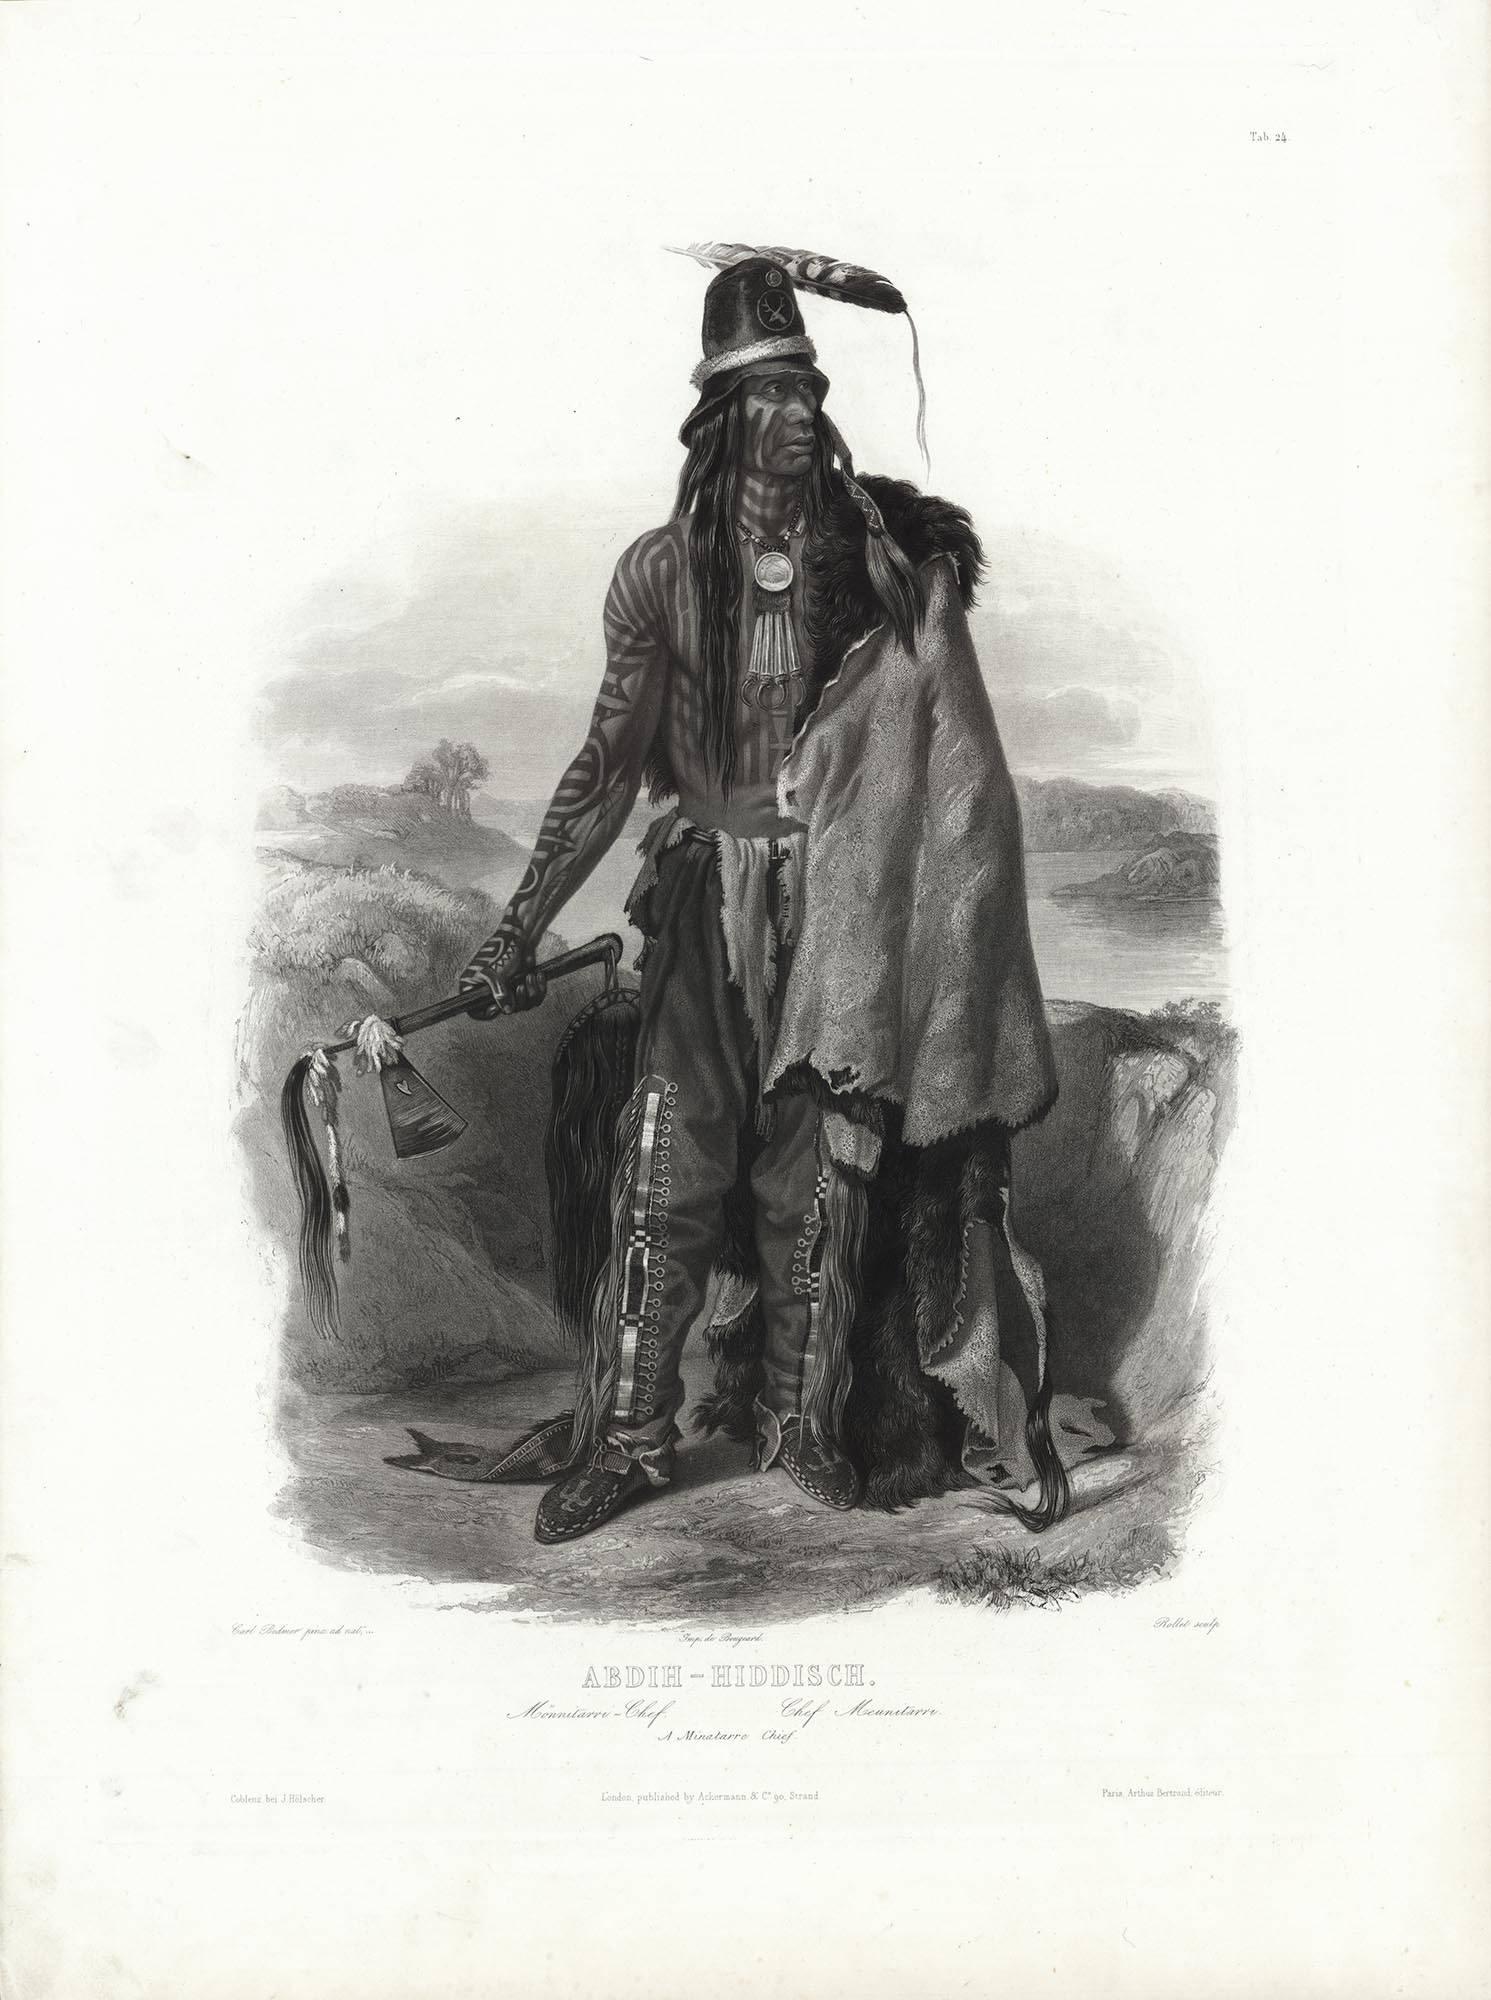 Abdih-Hiddisch. A Minatarre Chief. Tab 24.